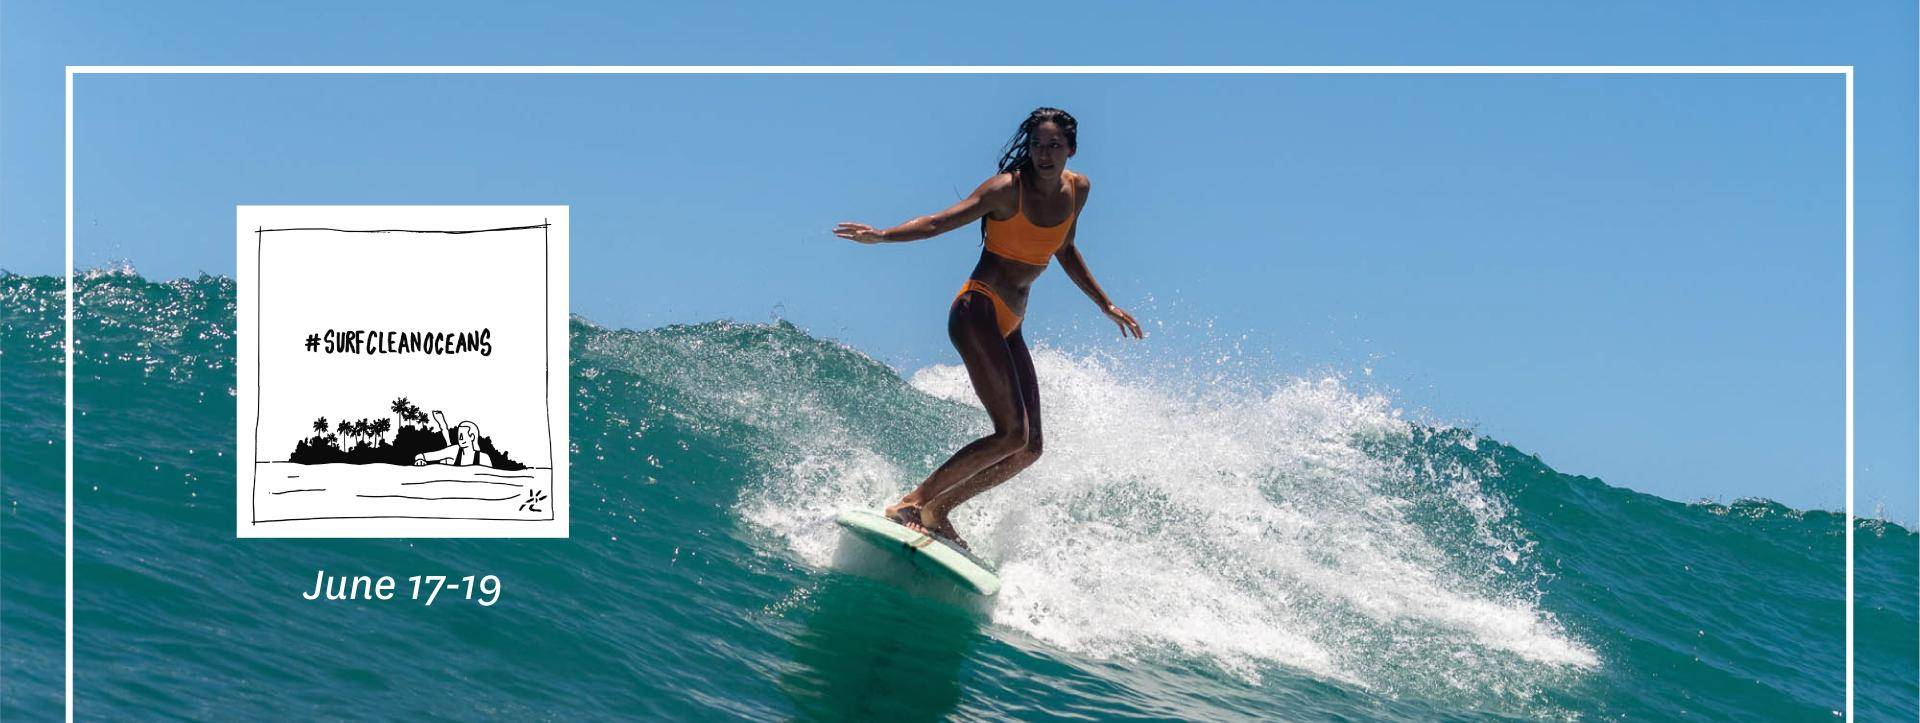 We support #SurfCleanOceans! 💙